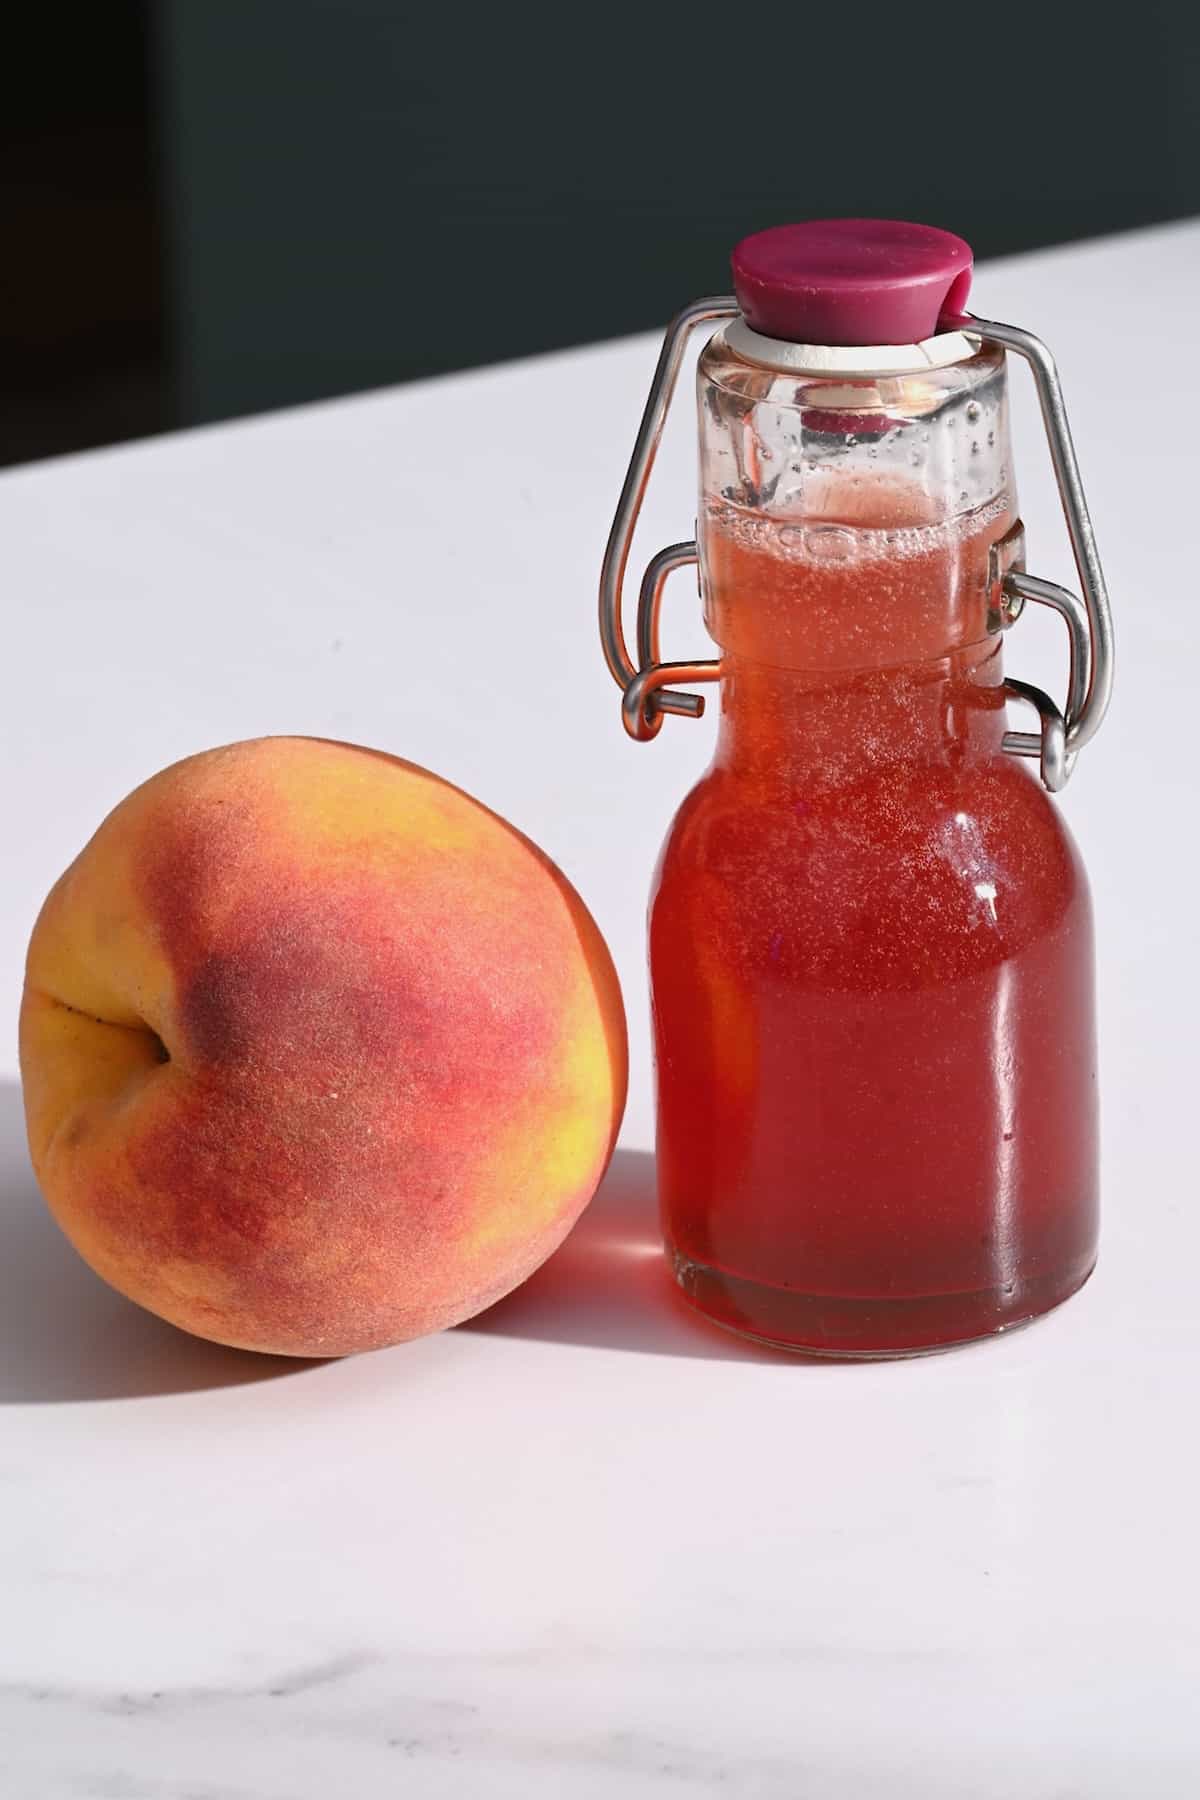 Peach Bubble Tea Recipe 3 Ways! Make From Syrup, Powder Or Fresh!